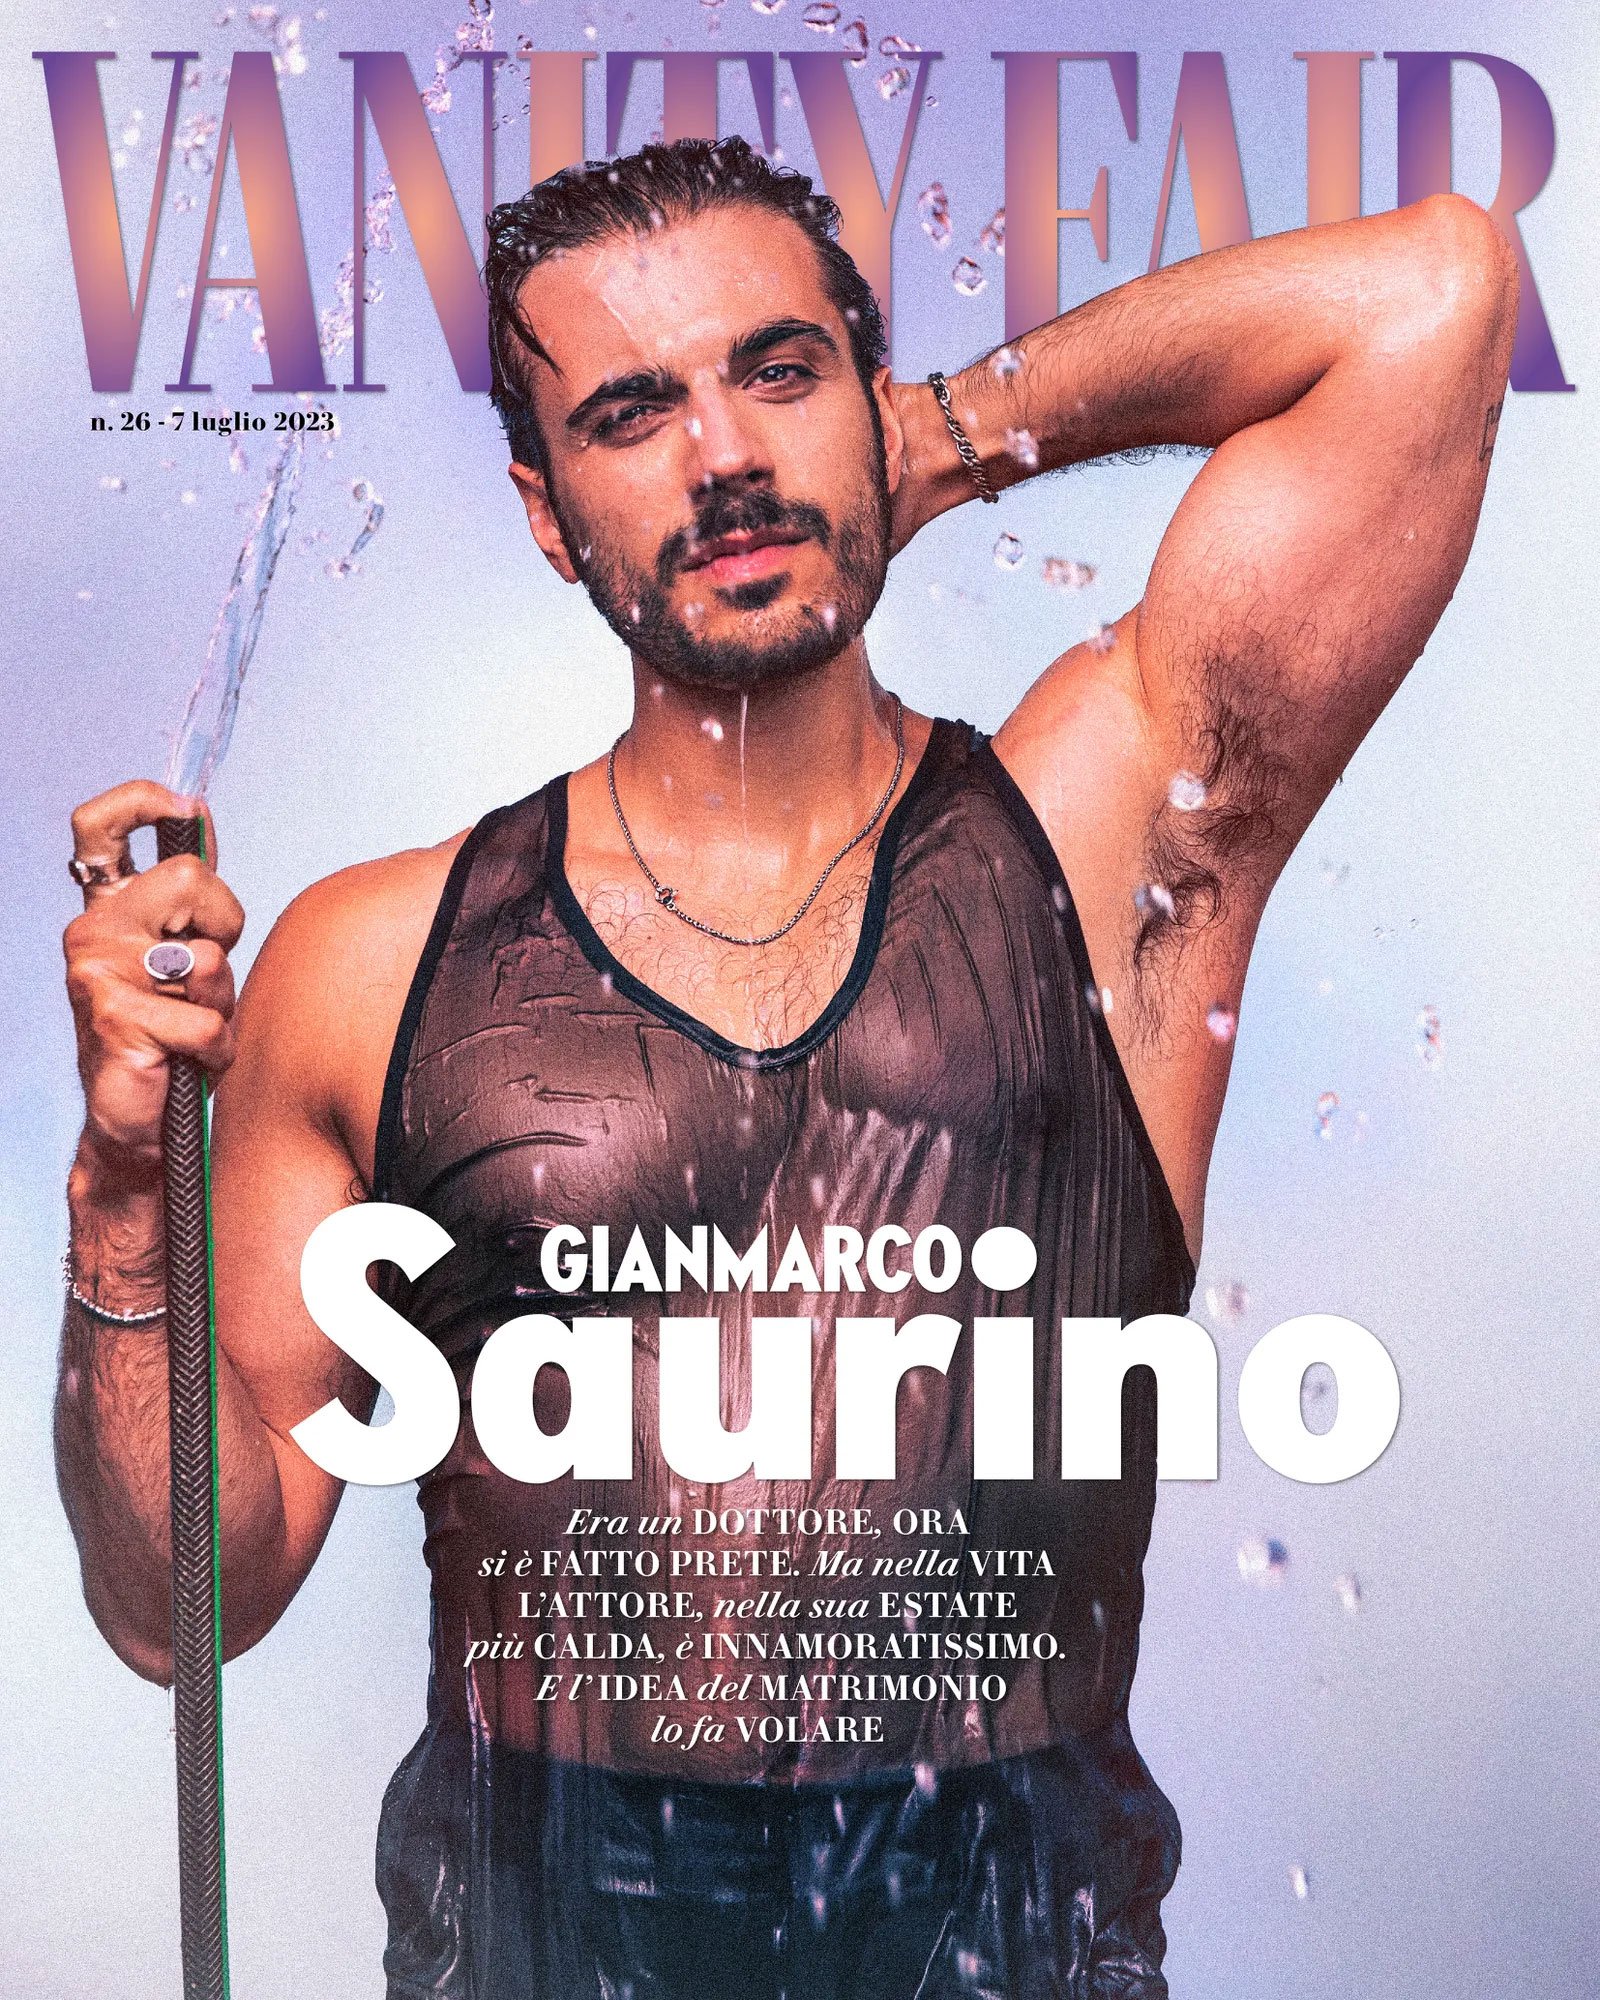 VANITY FAIR - Gianmarco Saurino0